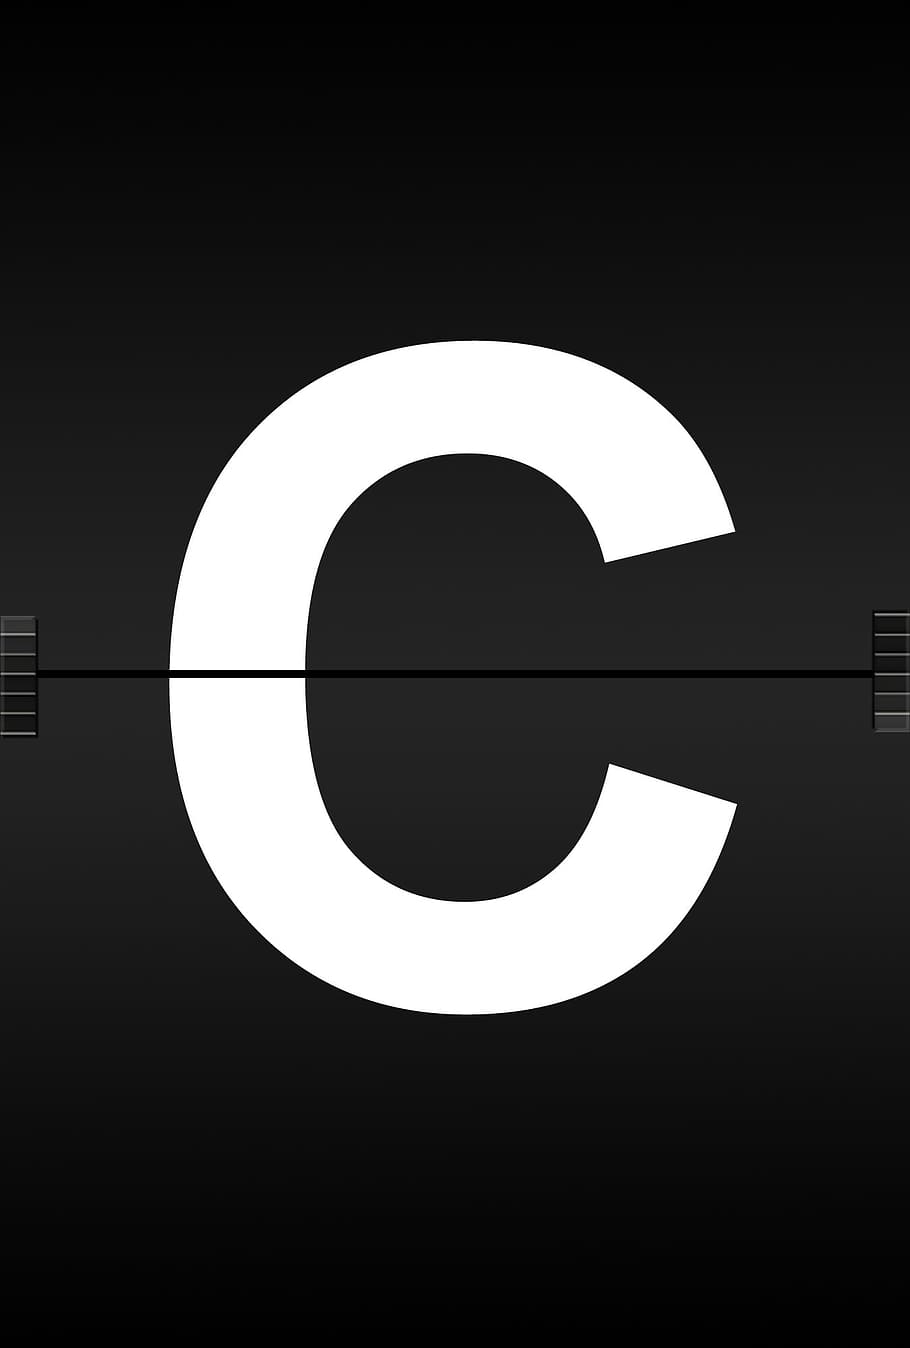 c logo, letters, abc, alphabet, journal font, airport, scoreboard, ad, railway station, board